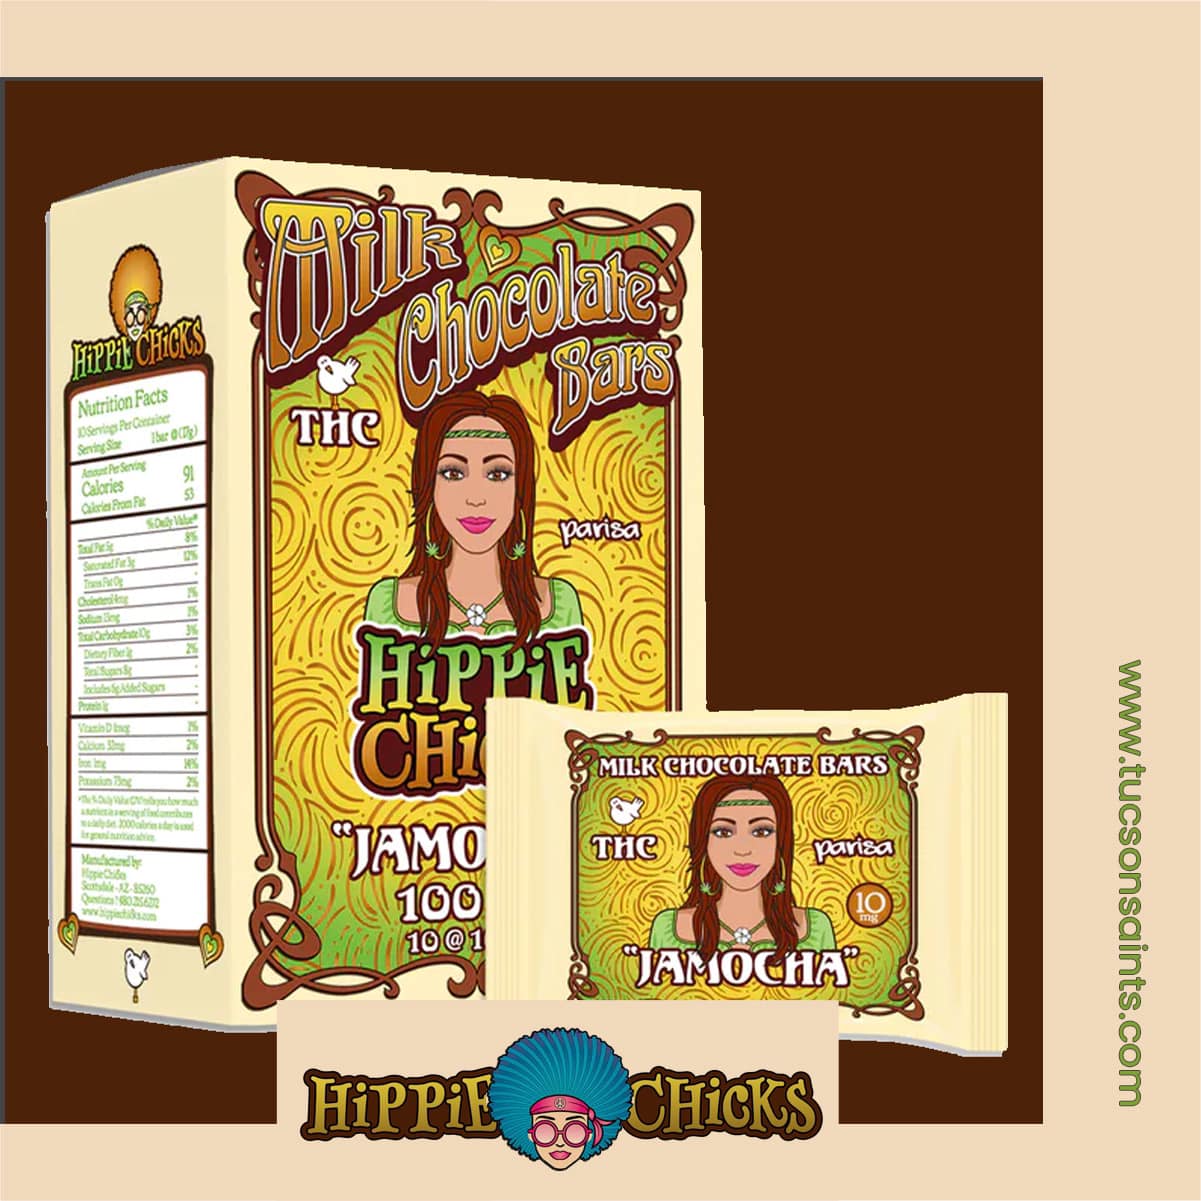 Hippie Chicks edibles tucson dispensary Jamocha